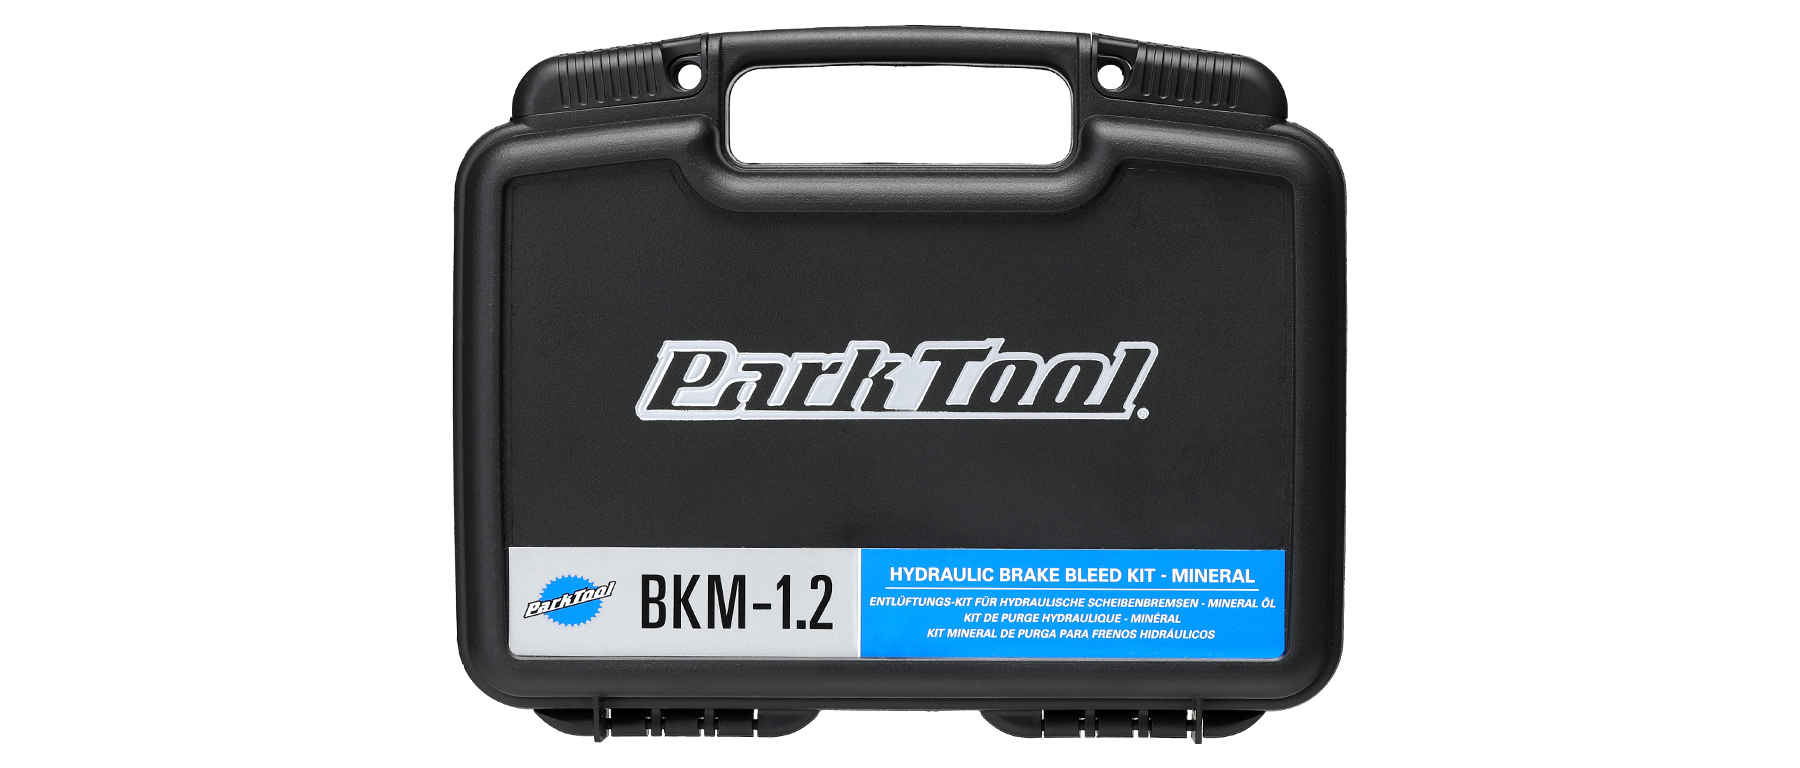 Park Tool BKM-1.2 Hydraulic Brake Bleed Kit- Mineral